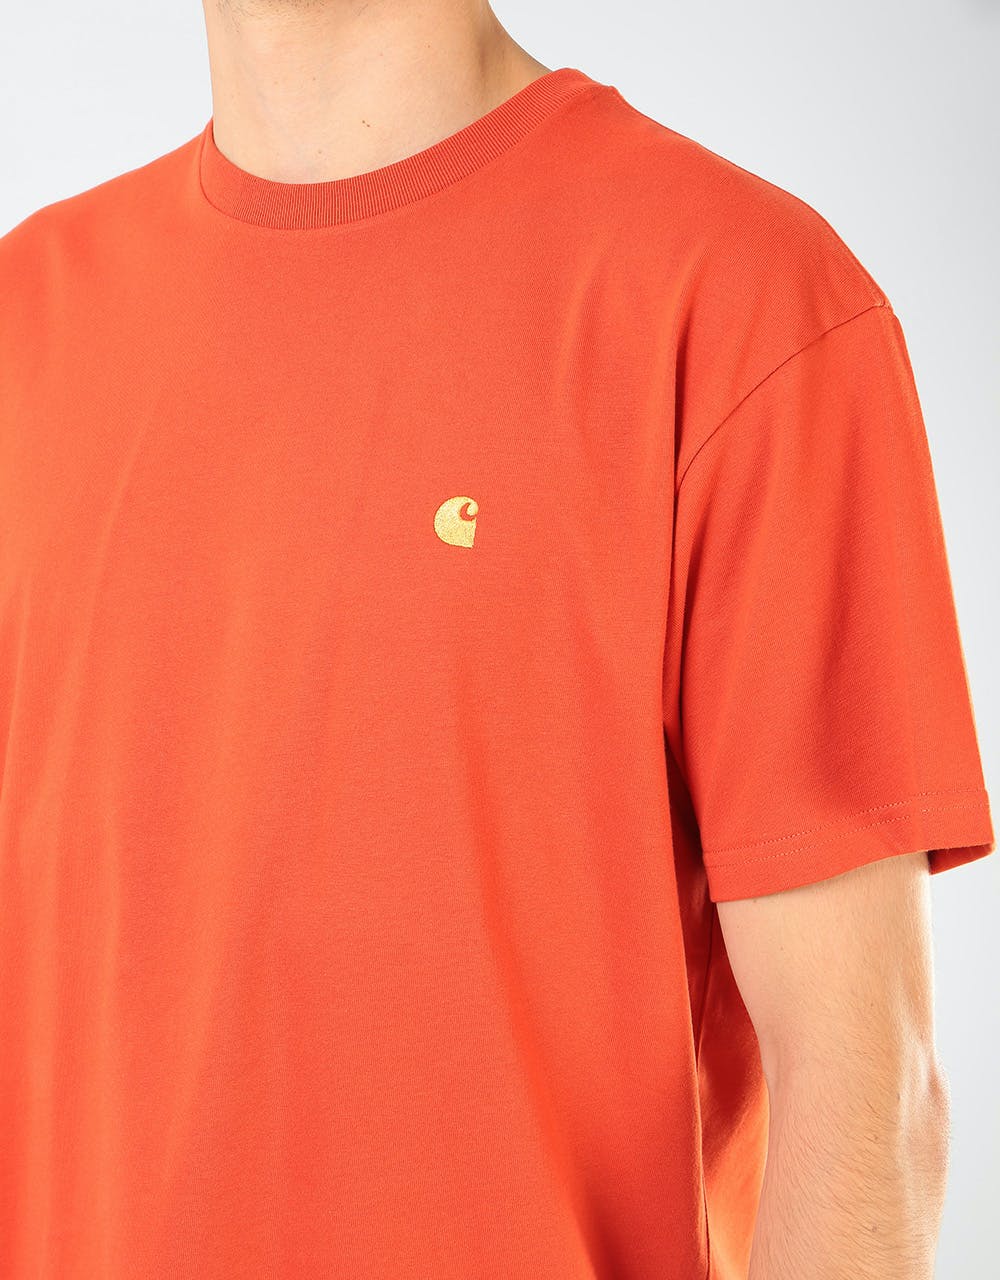 Carhartt WIP S/S Chase T-Shirt - Brick Orange/Gold